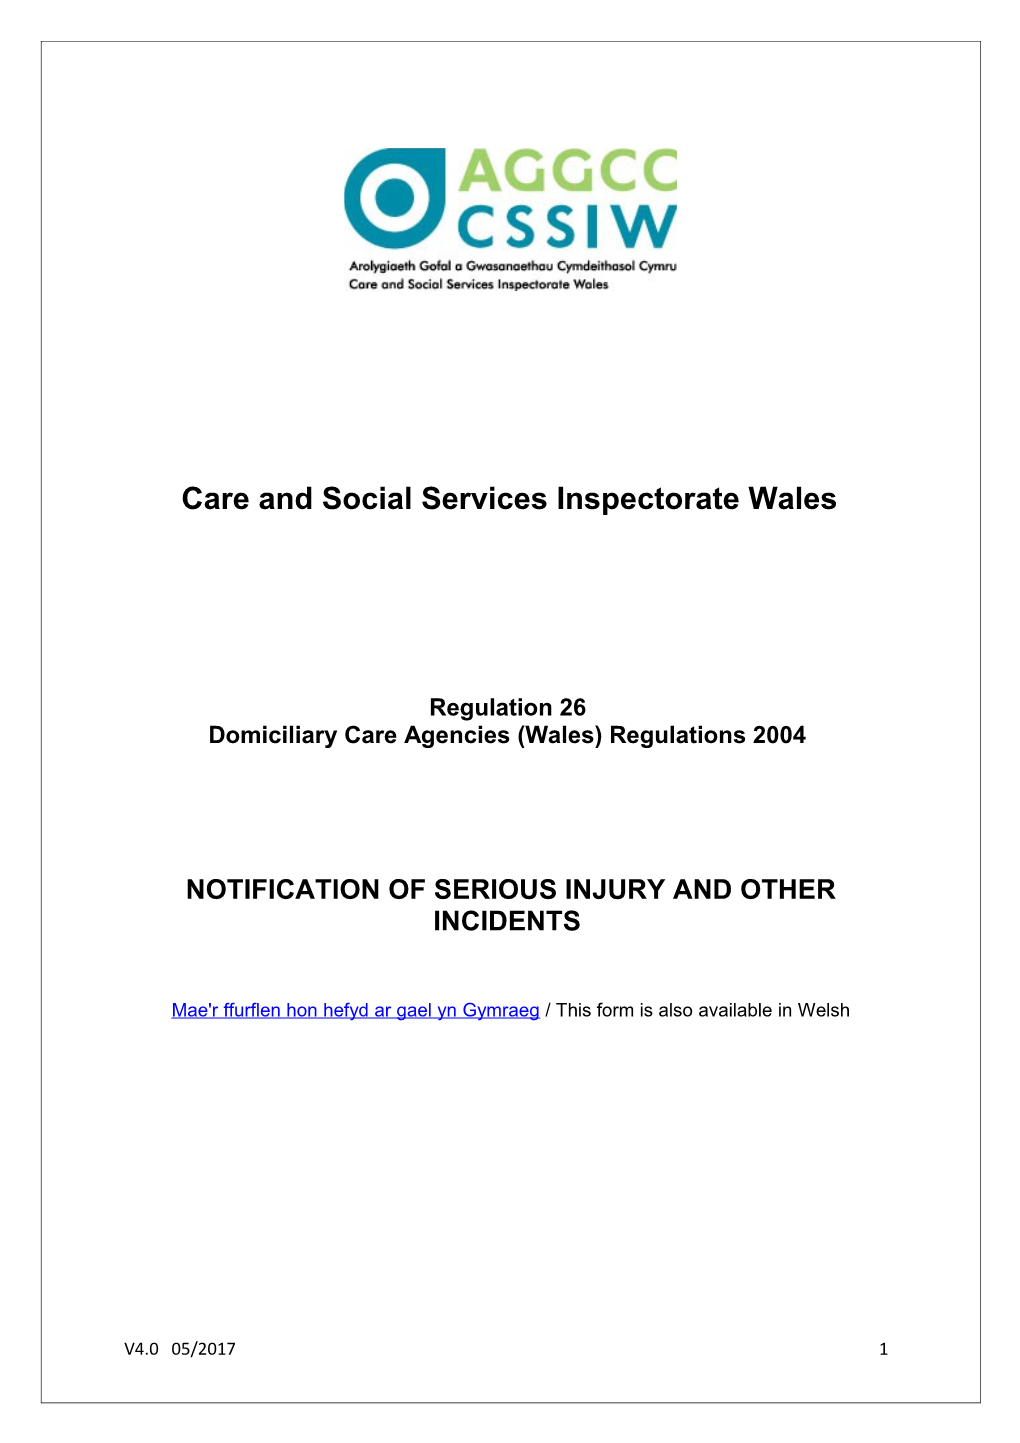 Regulation 26 - Domiciliary Care Agencies (Wales) Regulations 2004